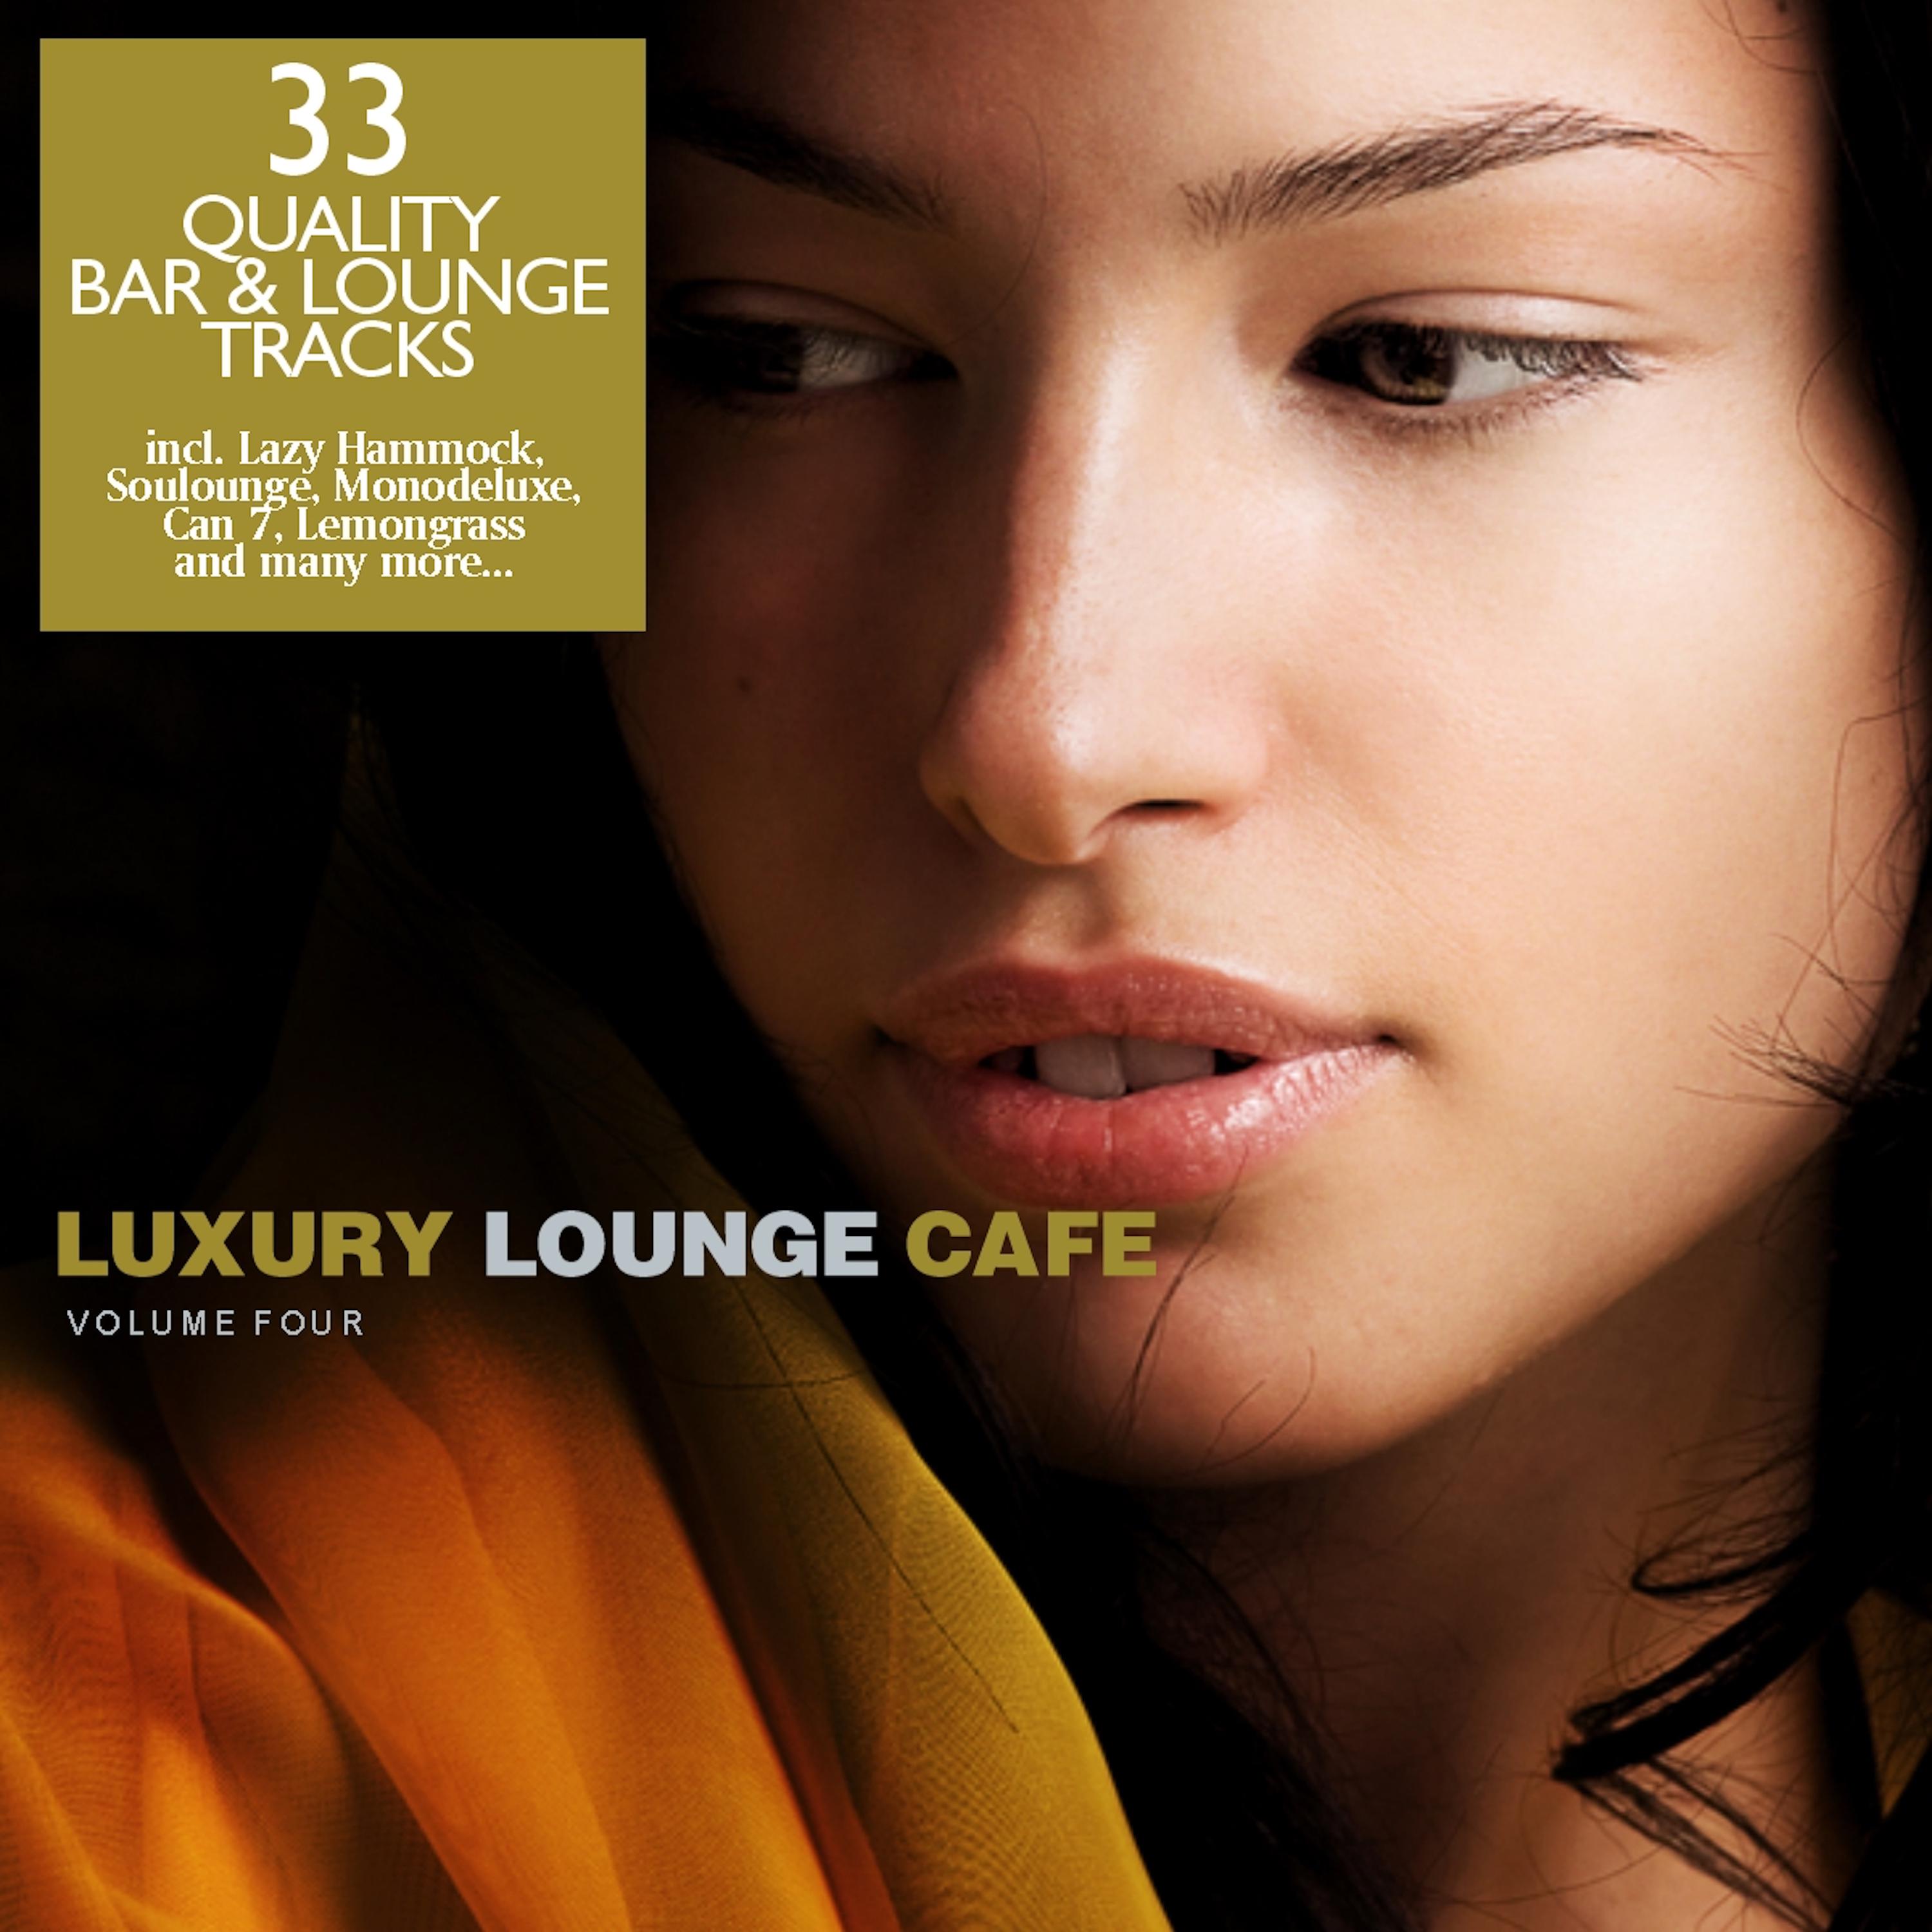 Luxury Lounge Cafe Vol. 4 - 33 Quality Bar & Lounge Tracks